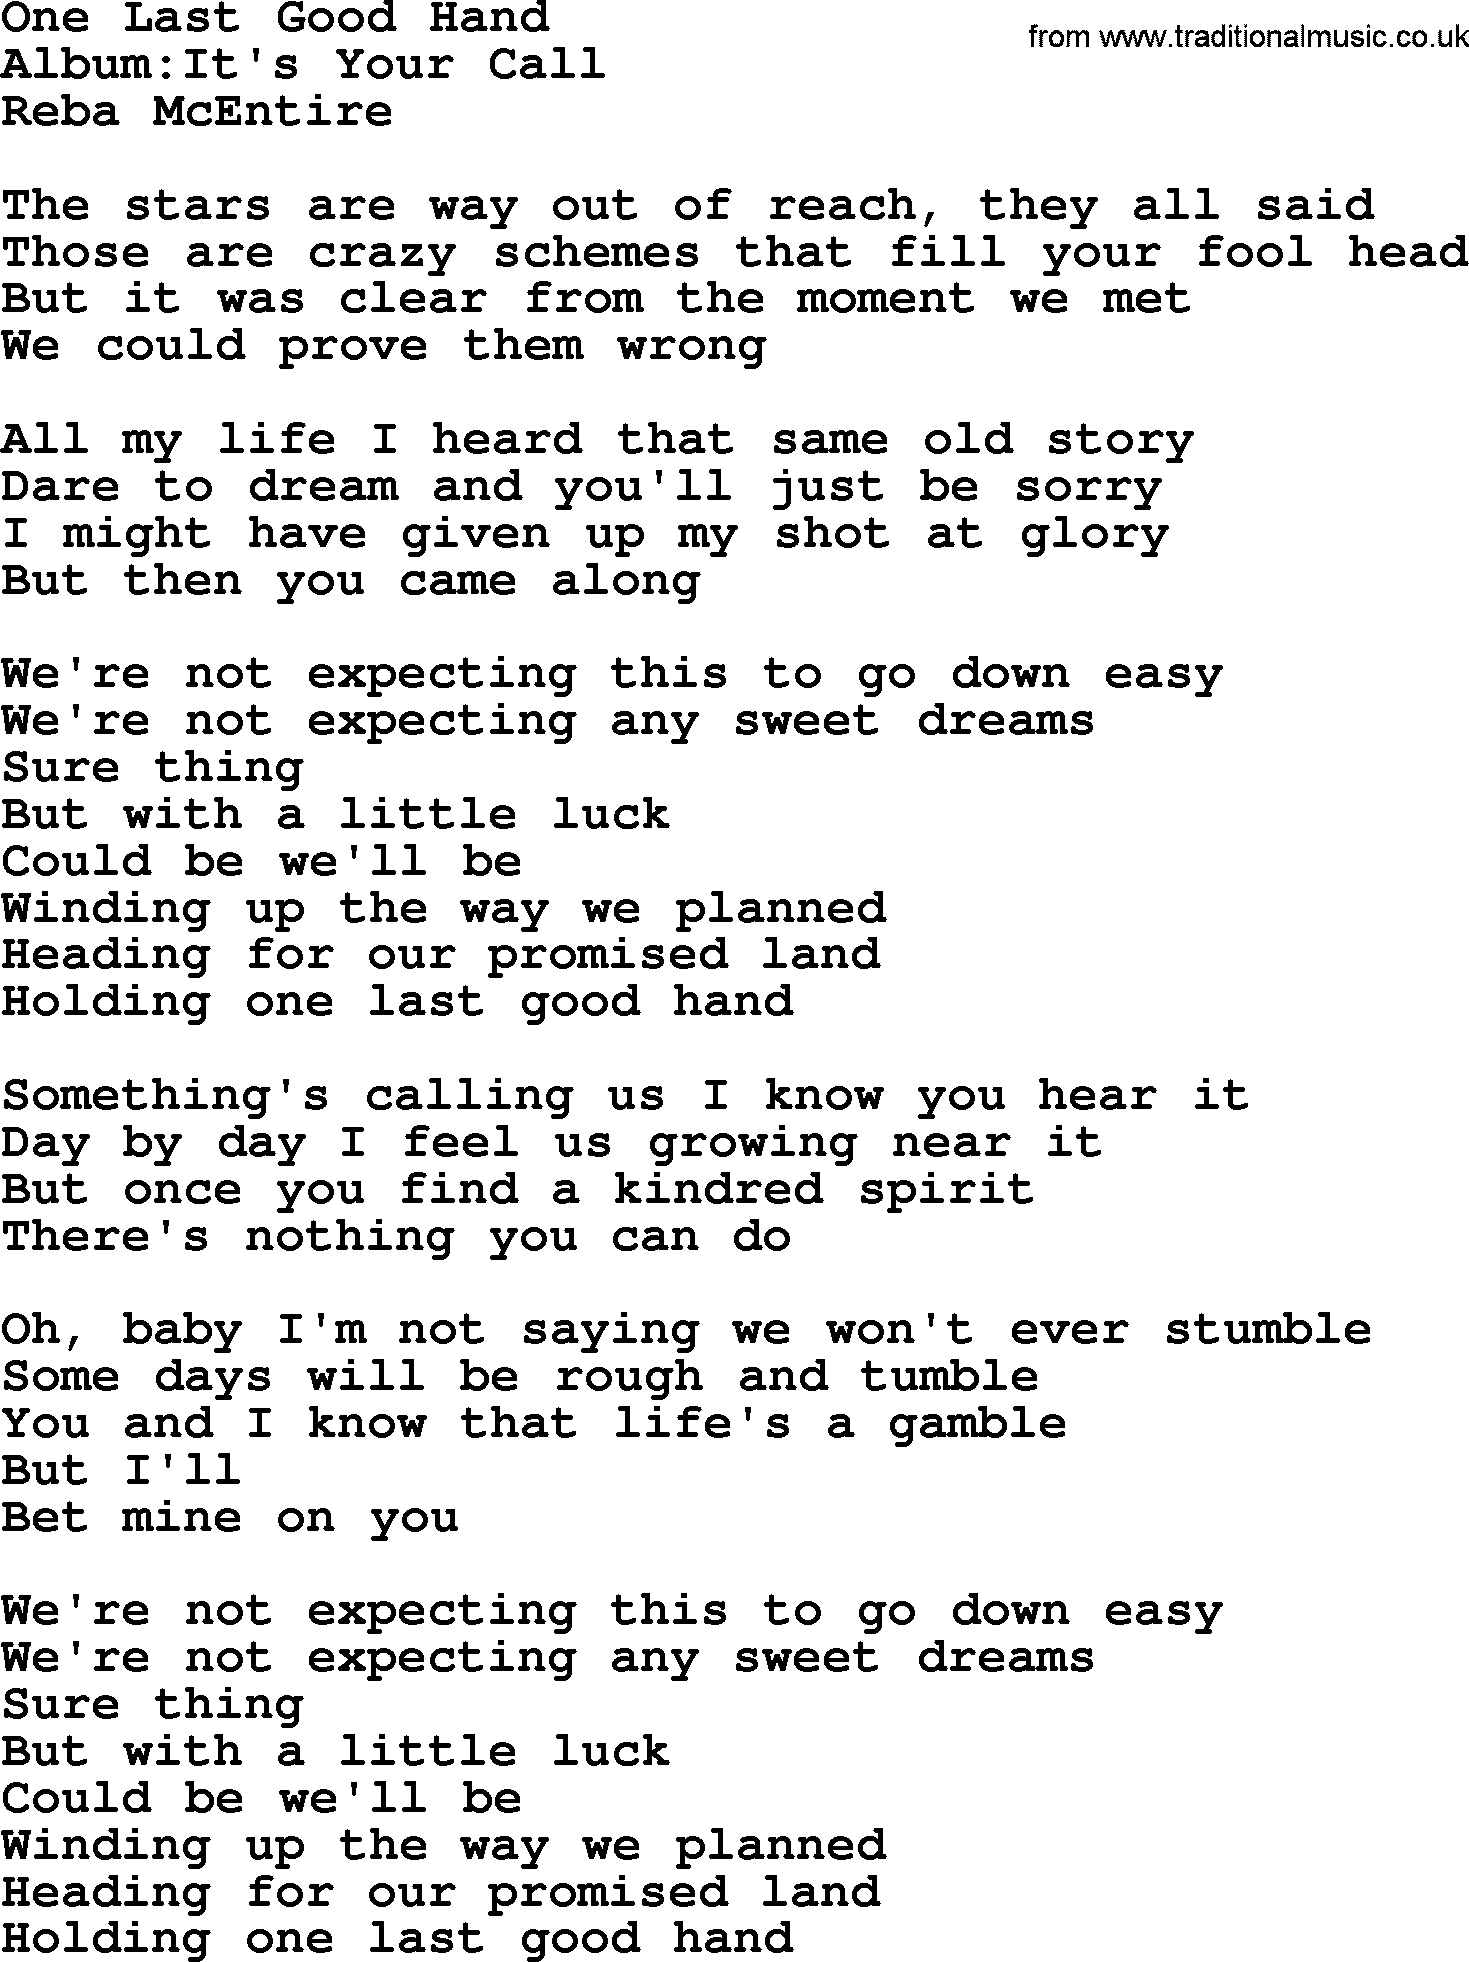 Reba McEntire song: One Last Good Hand lyrics